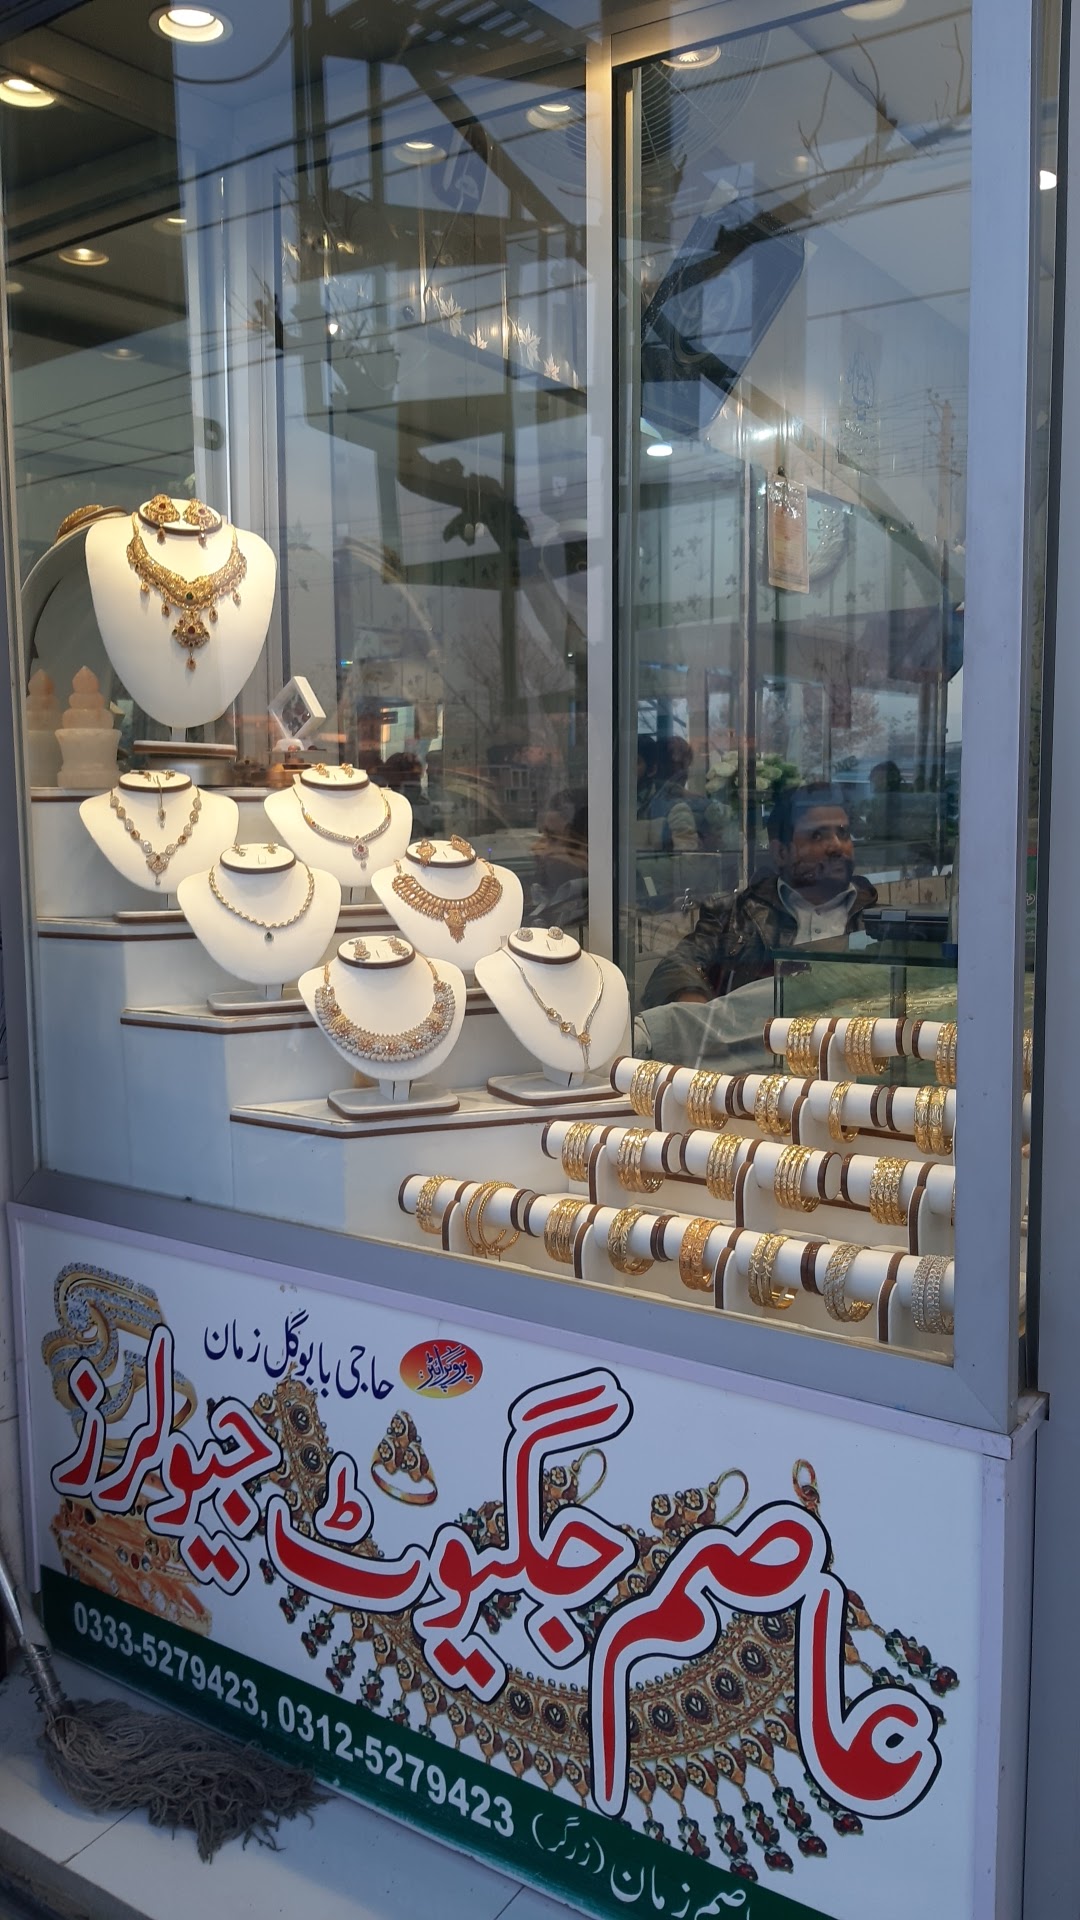 Asim jagiot jewellers